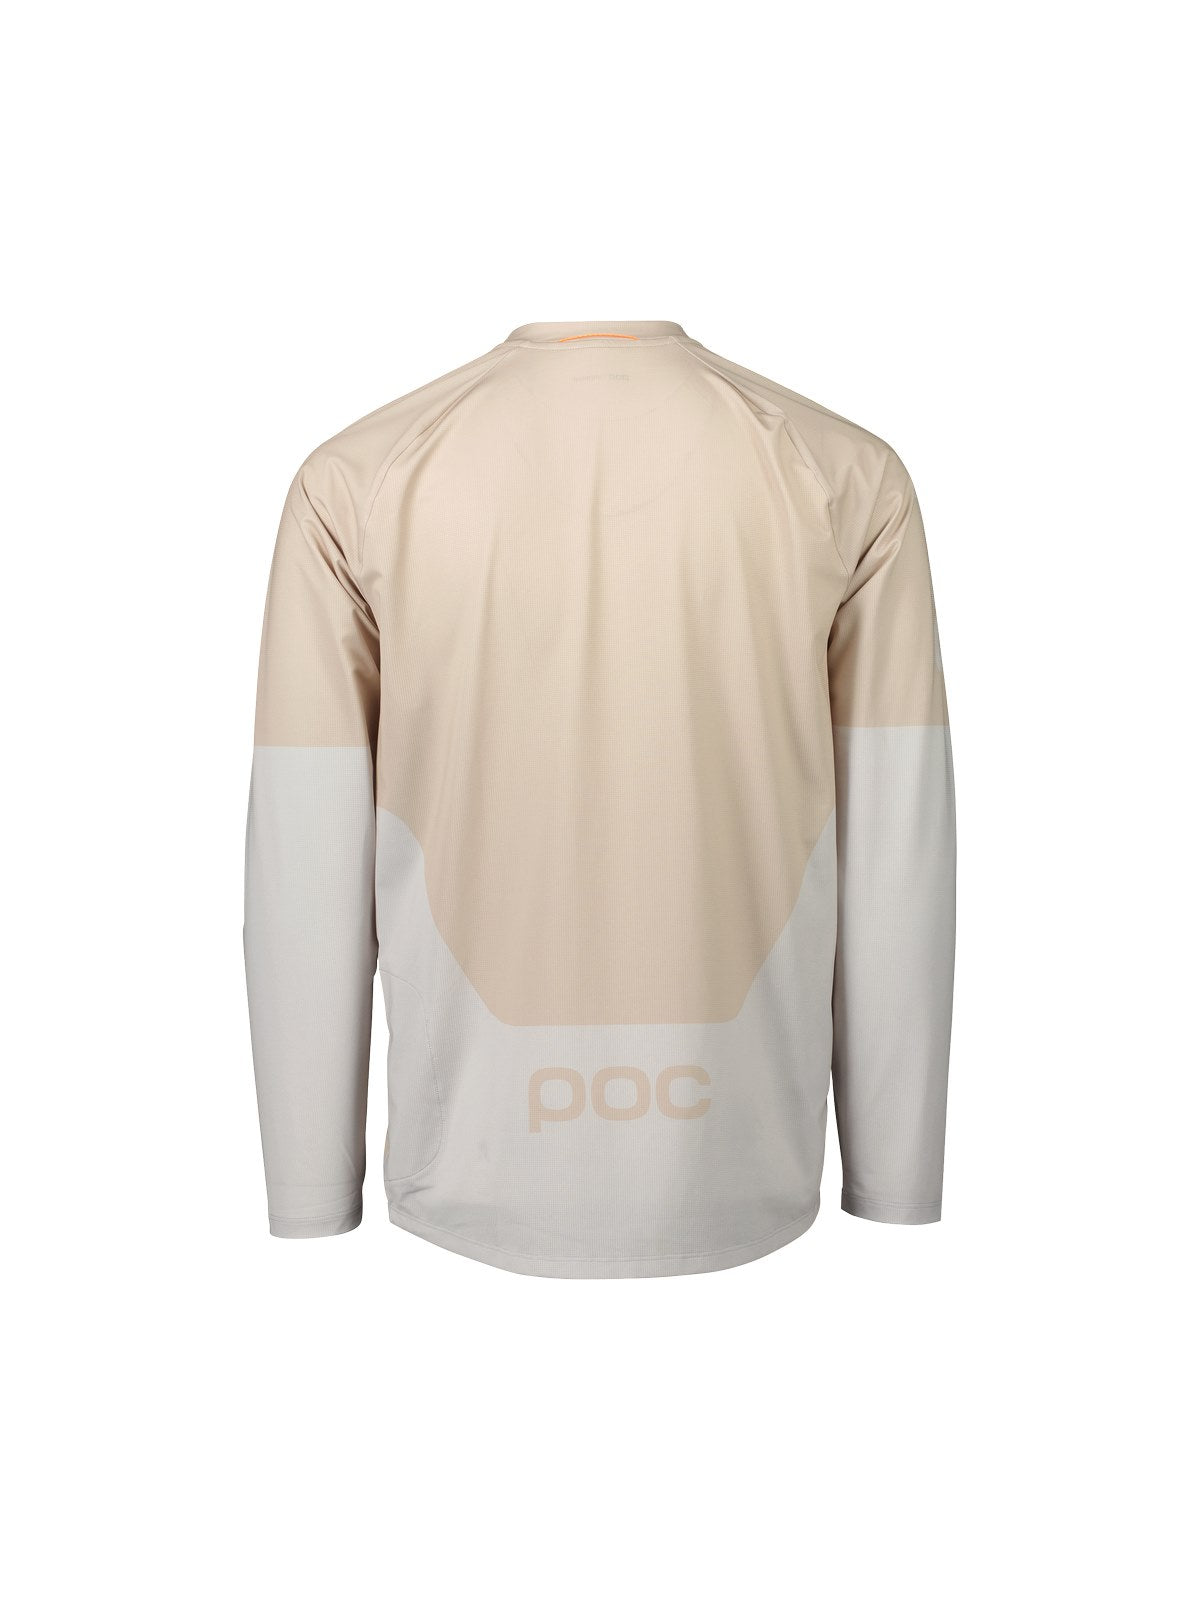 Koszulka rowerowa POC M's Essential MTB LS Jersey - Light Sandstone Beige